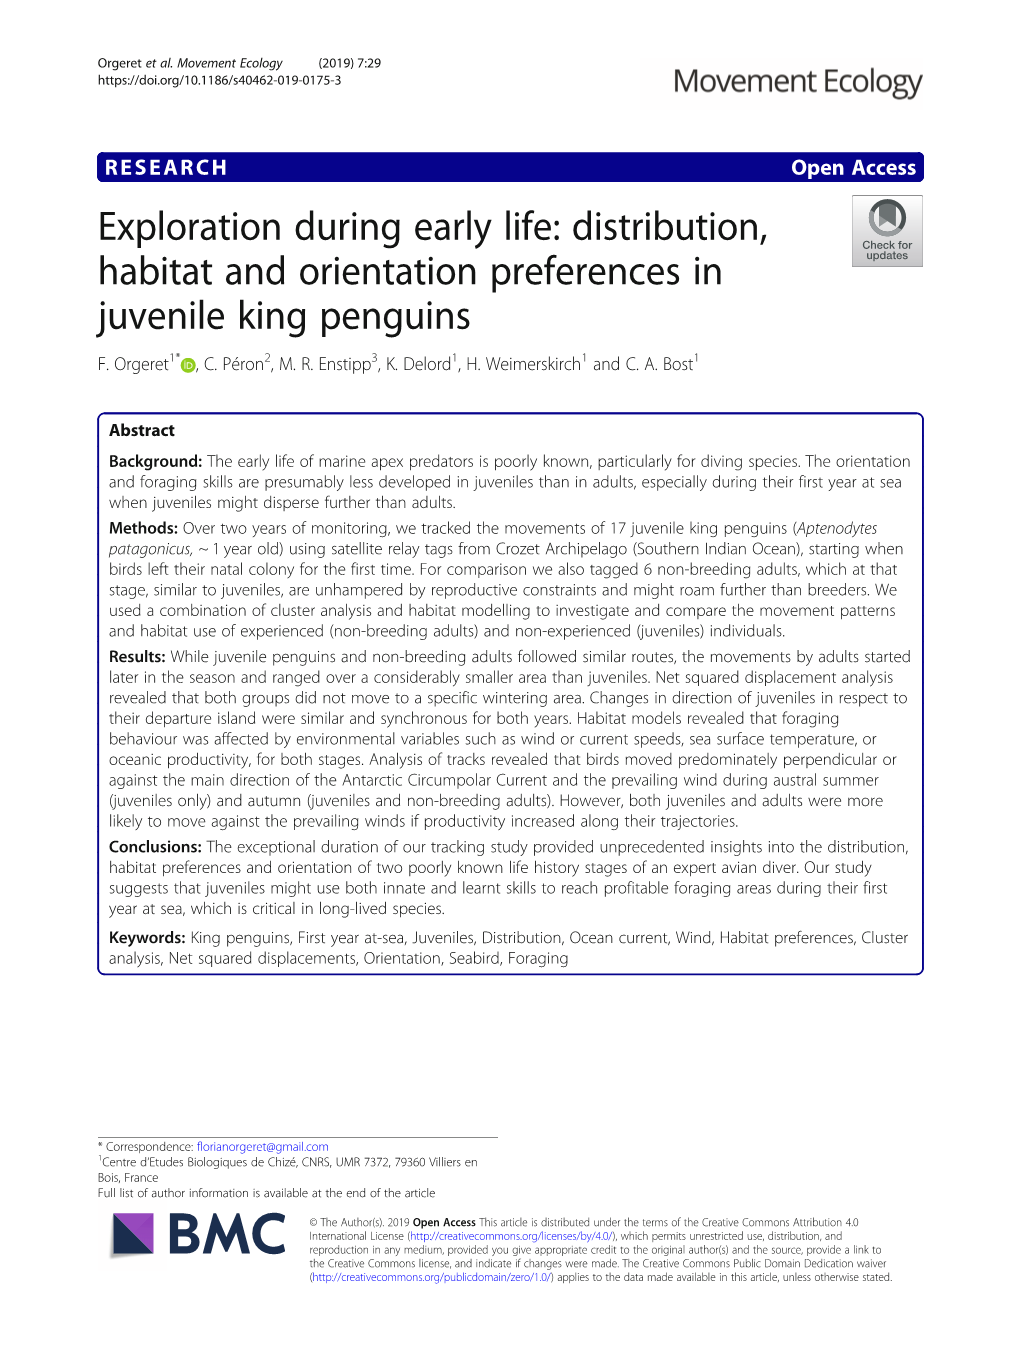 Distribution, Habitat and Orientation Preferences in Juvenile King Penguins F